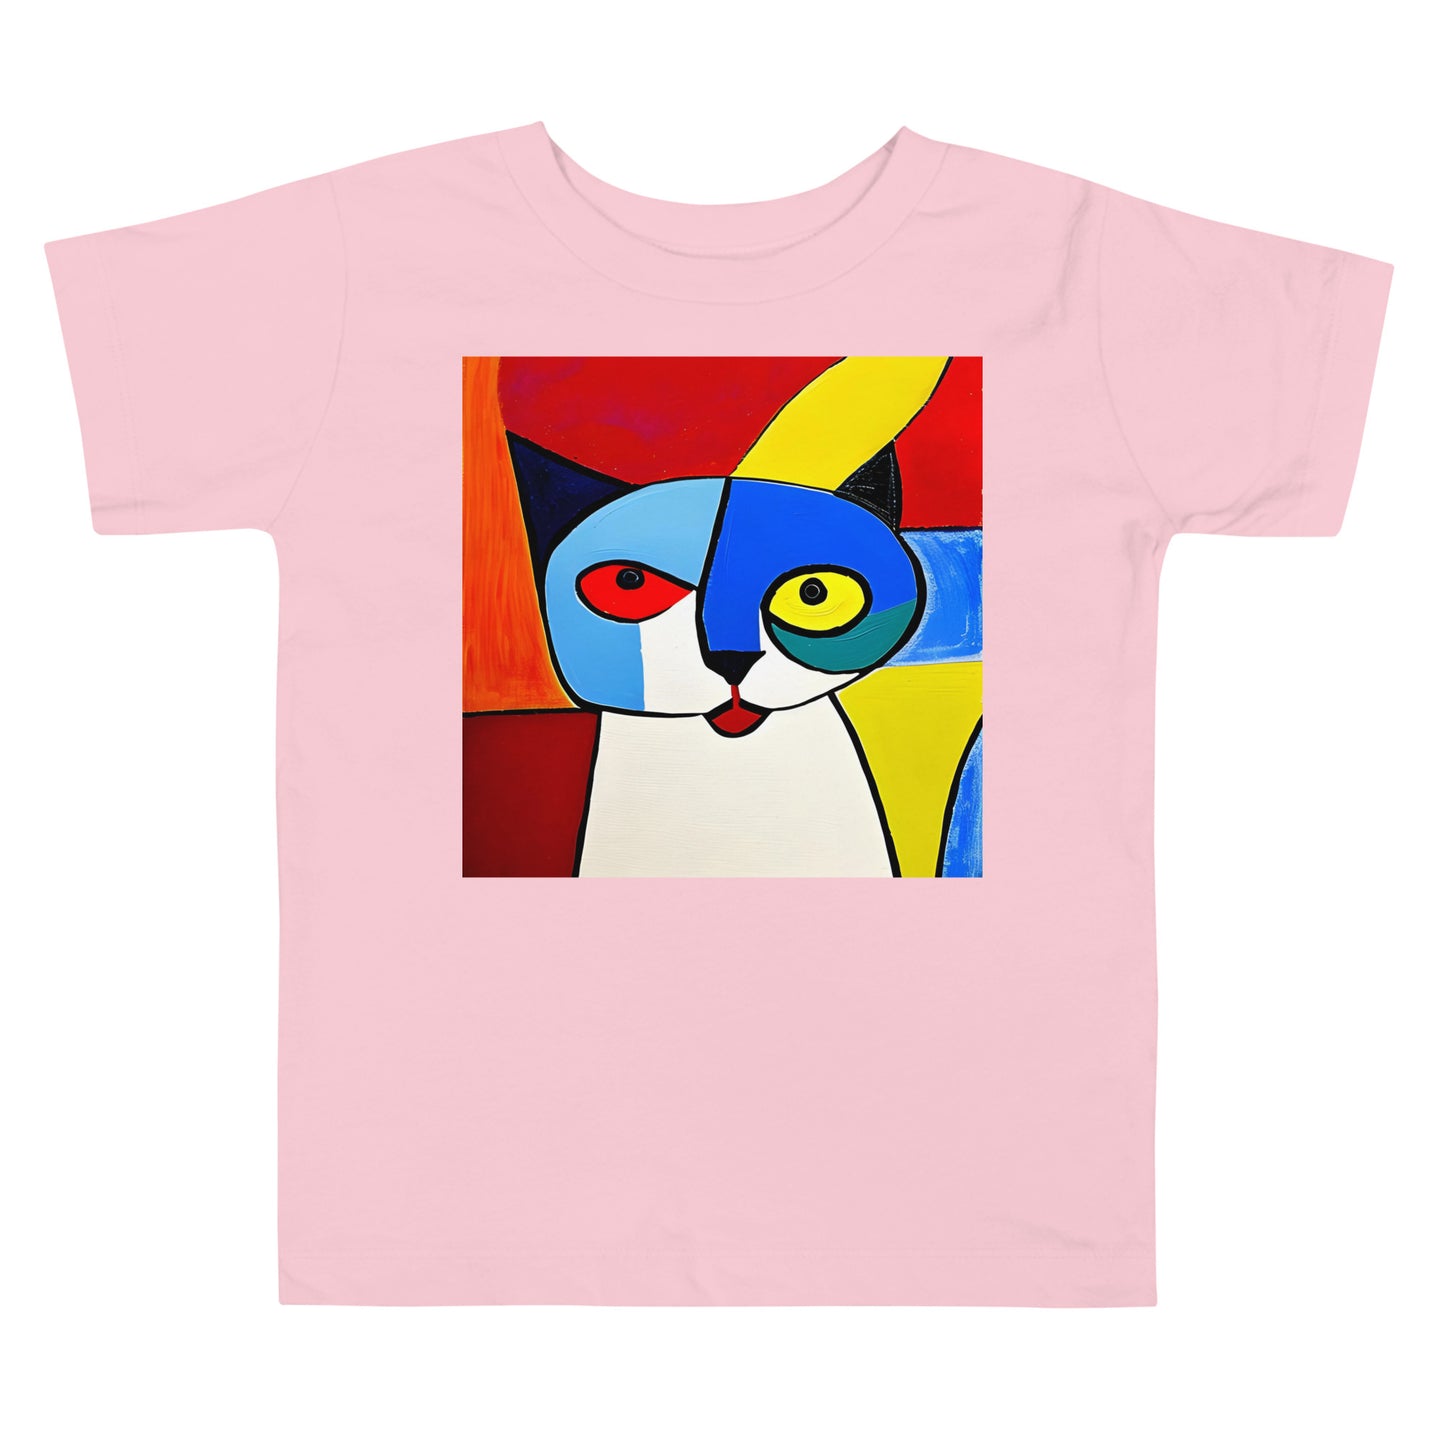 Purrfect Toddler's T-Shirt - 009